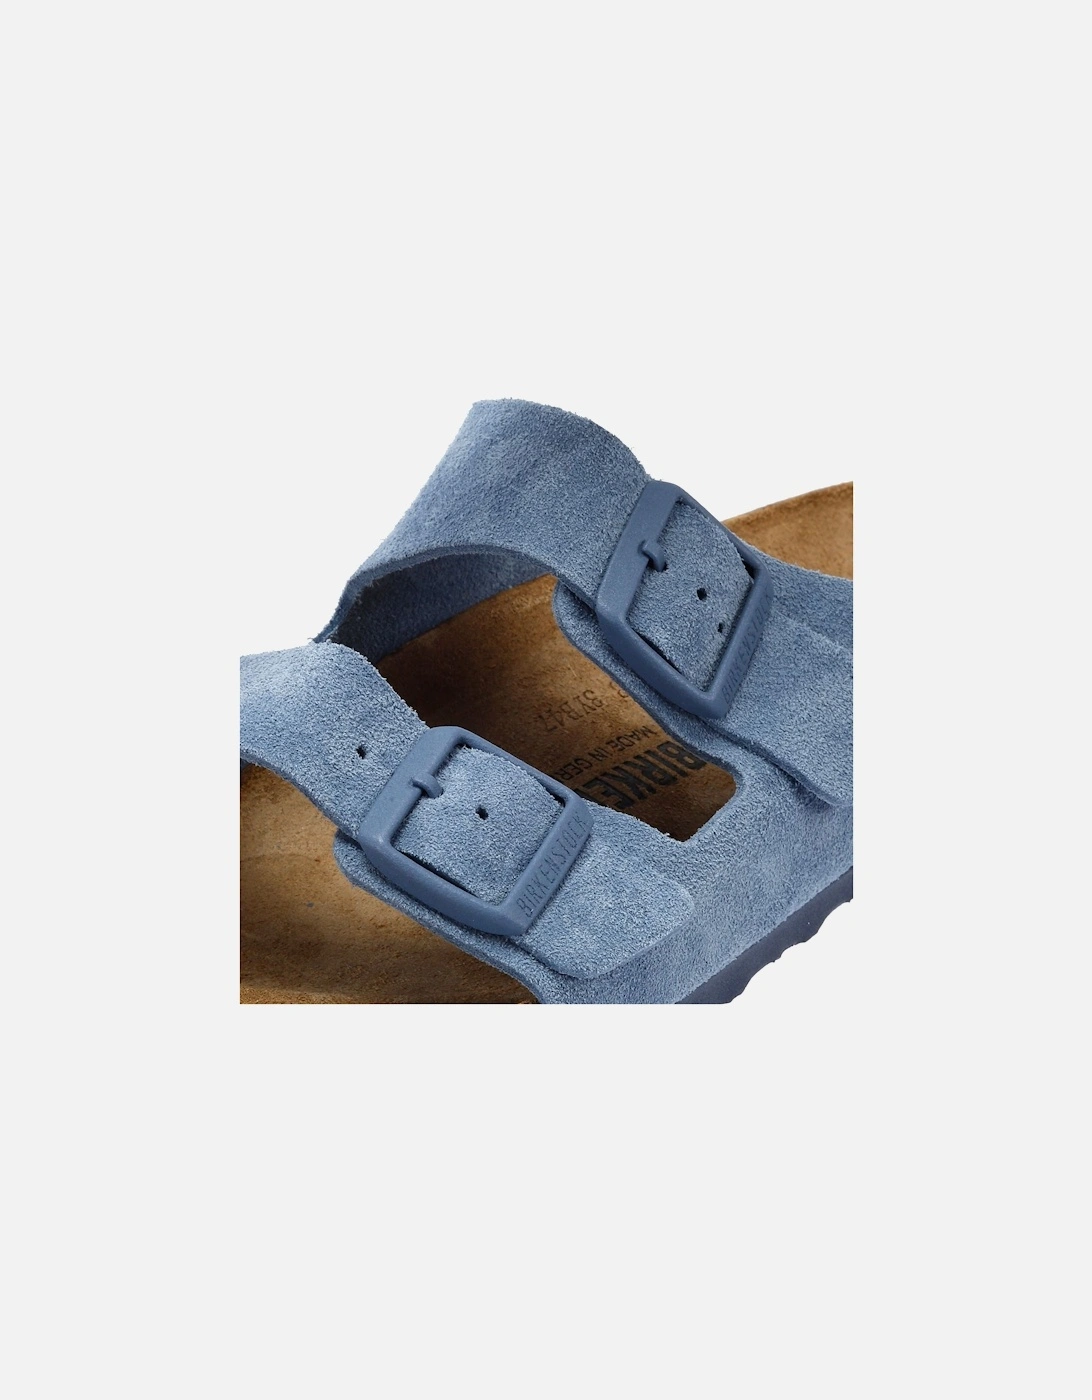 Suede Elemental Blue Sandals